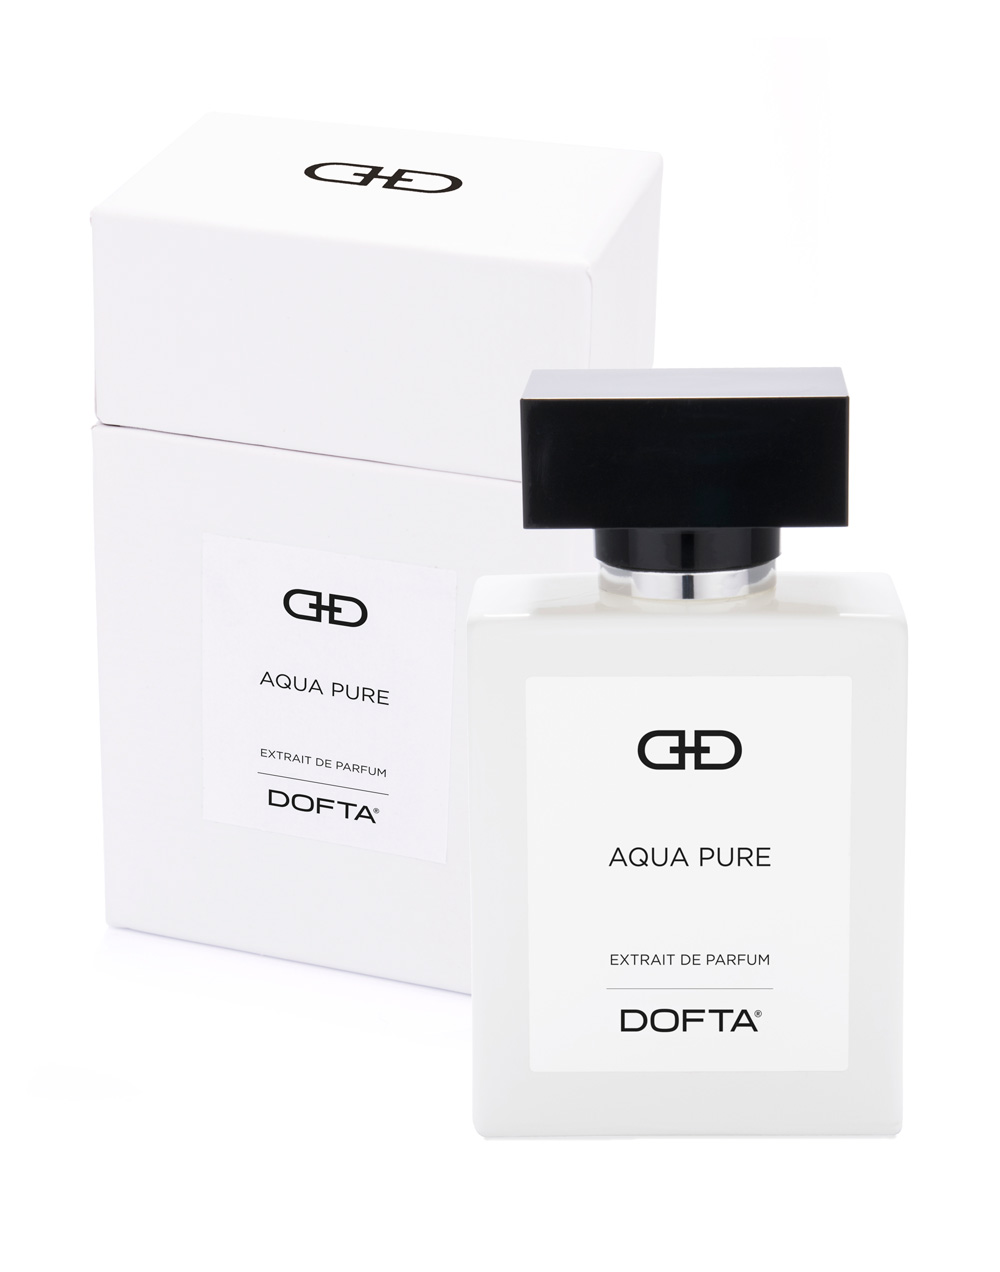 Aqua Pure Extrait de Parfum Dofta perfume - a fragrance for women and men  2018